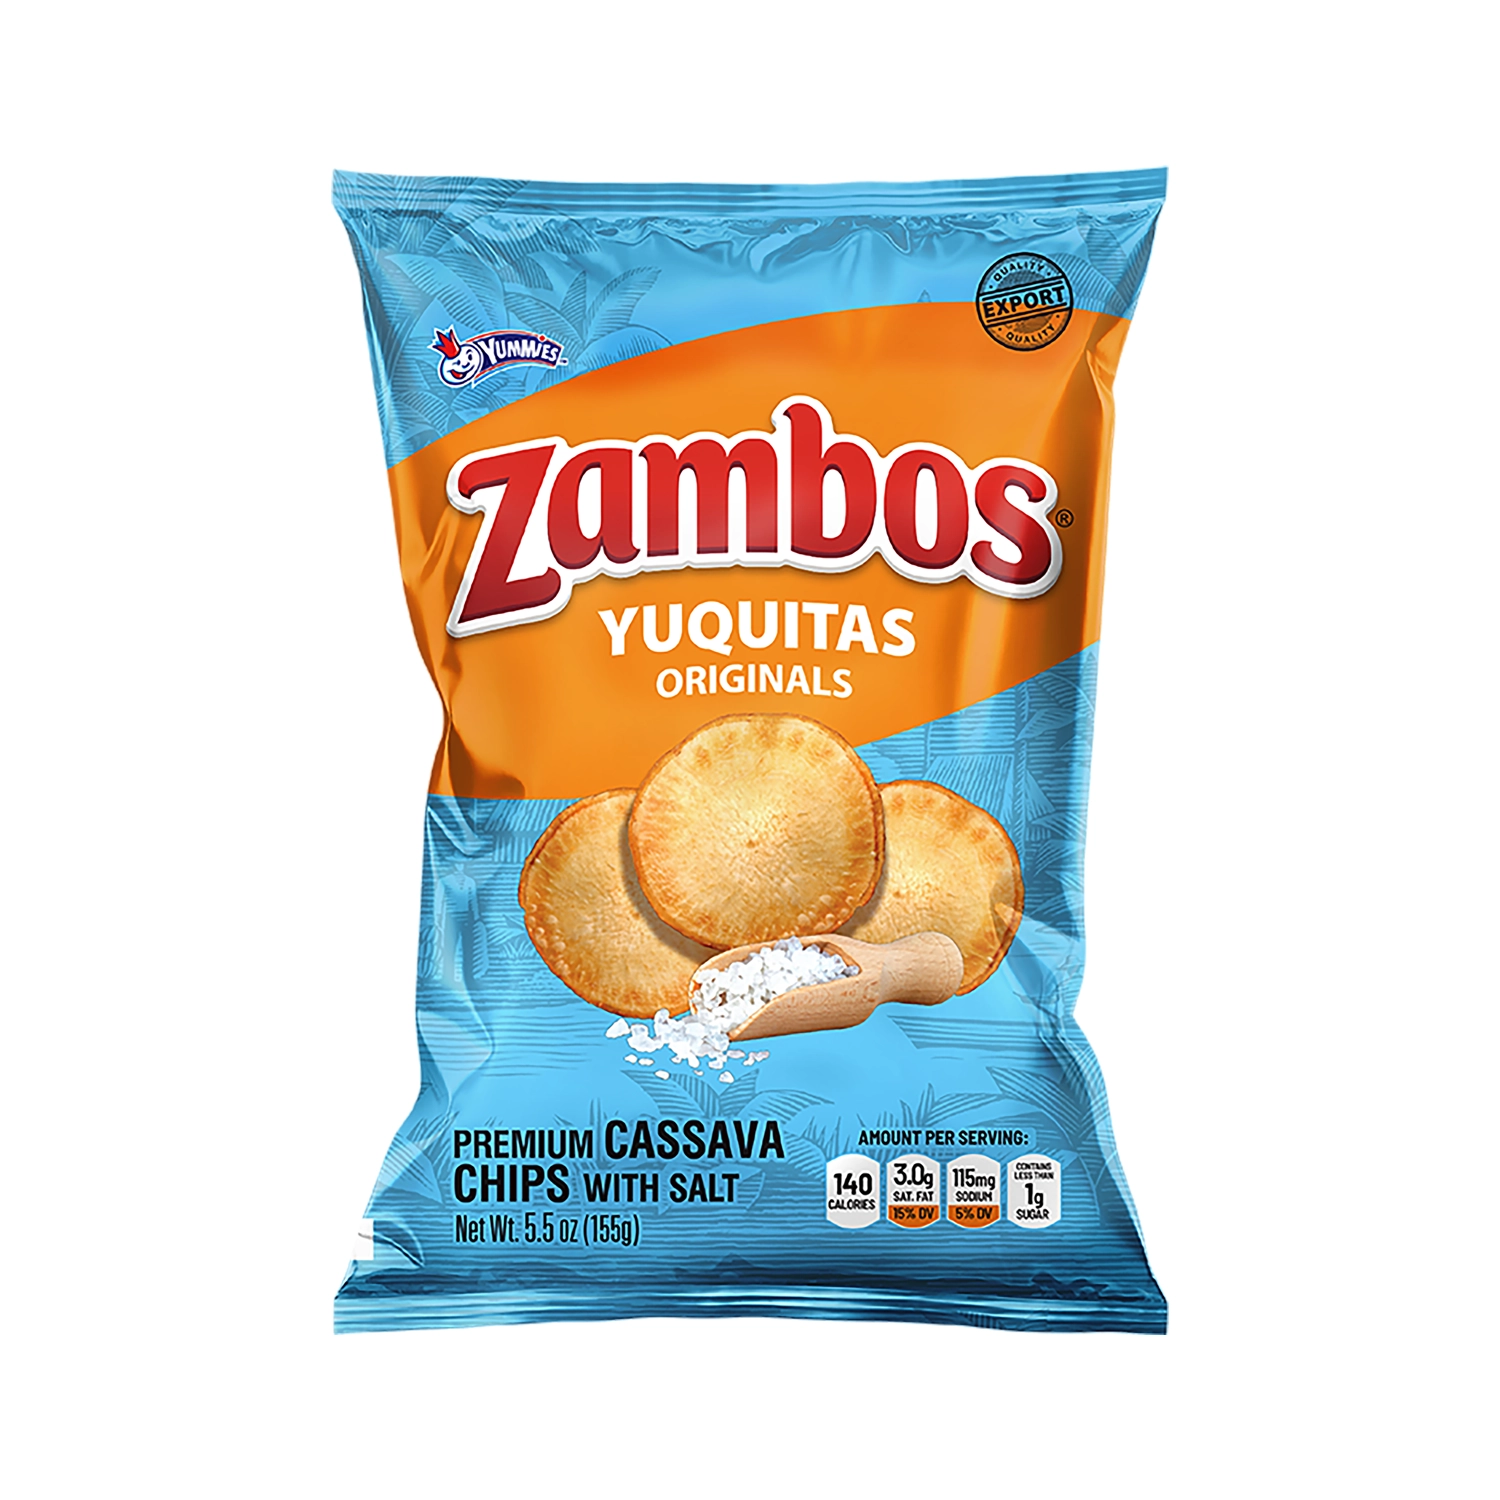 ZAMBOS Yuquitas Chip w Salt 24 or 155 grms